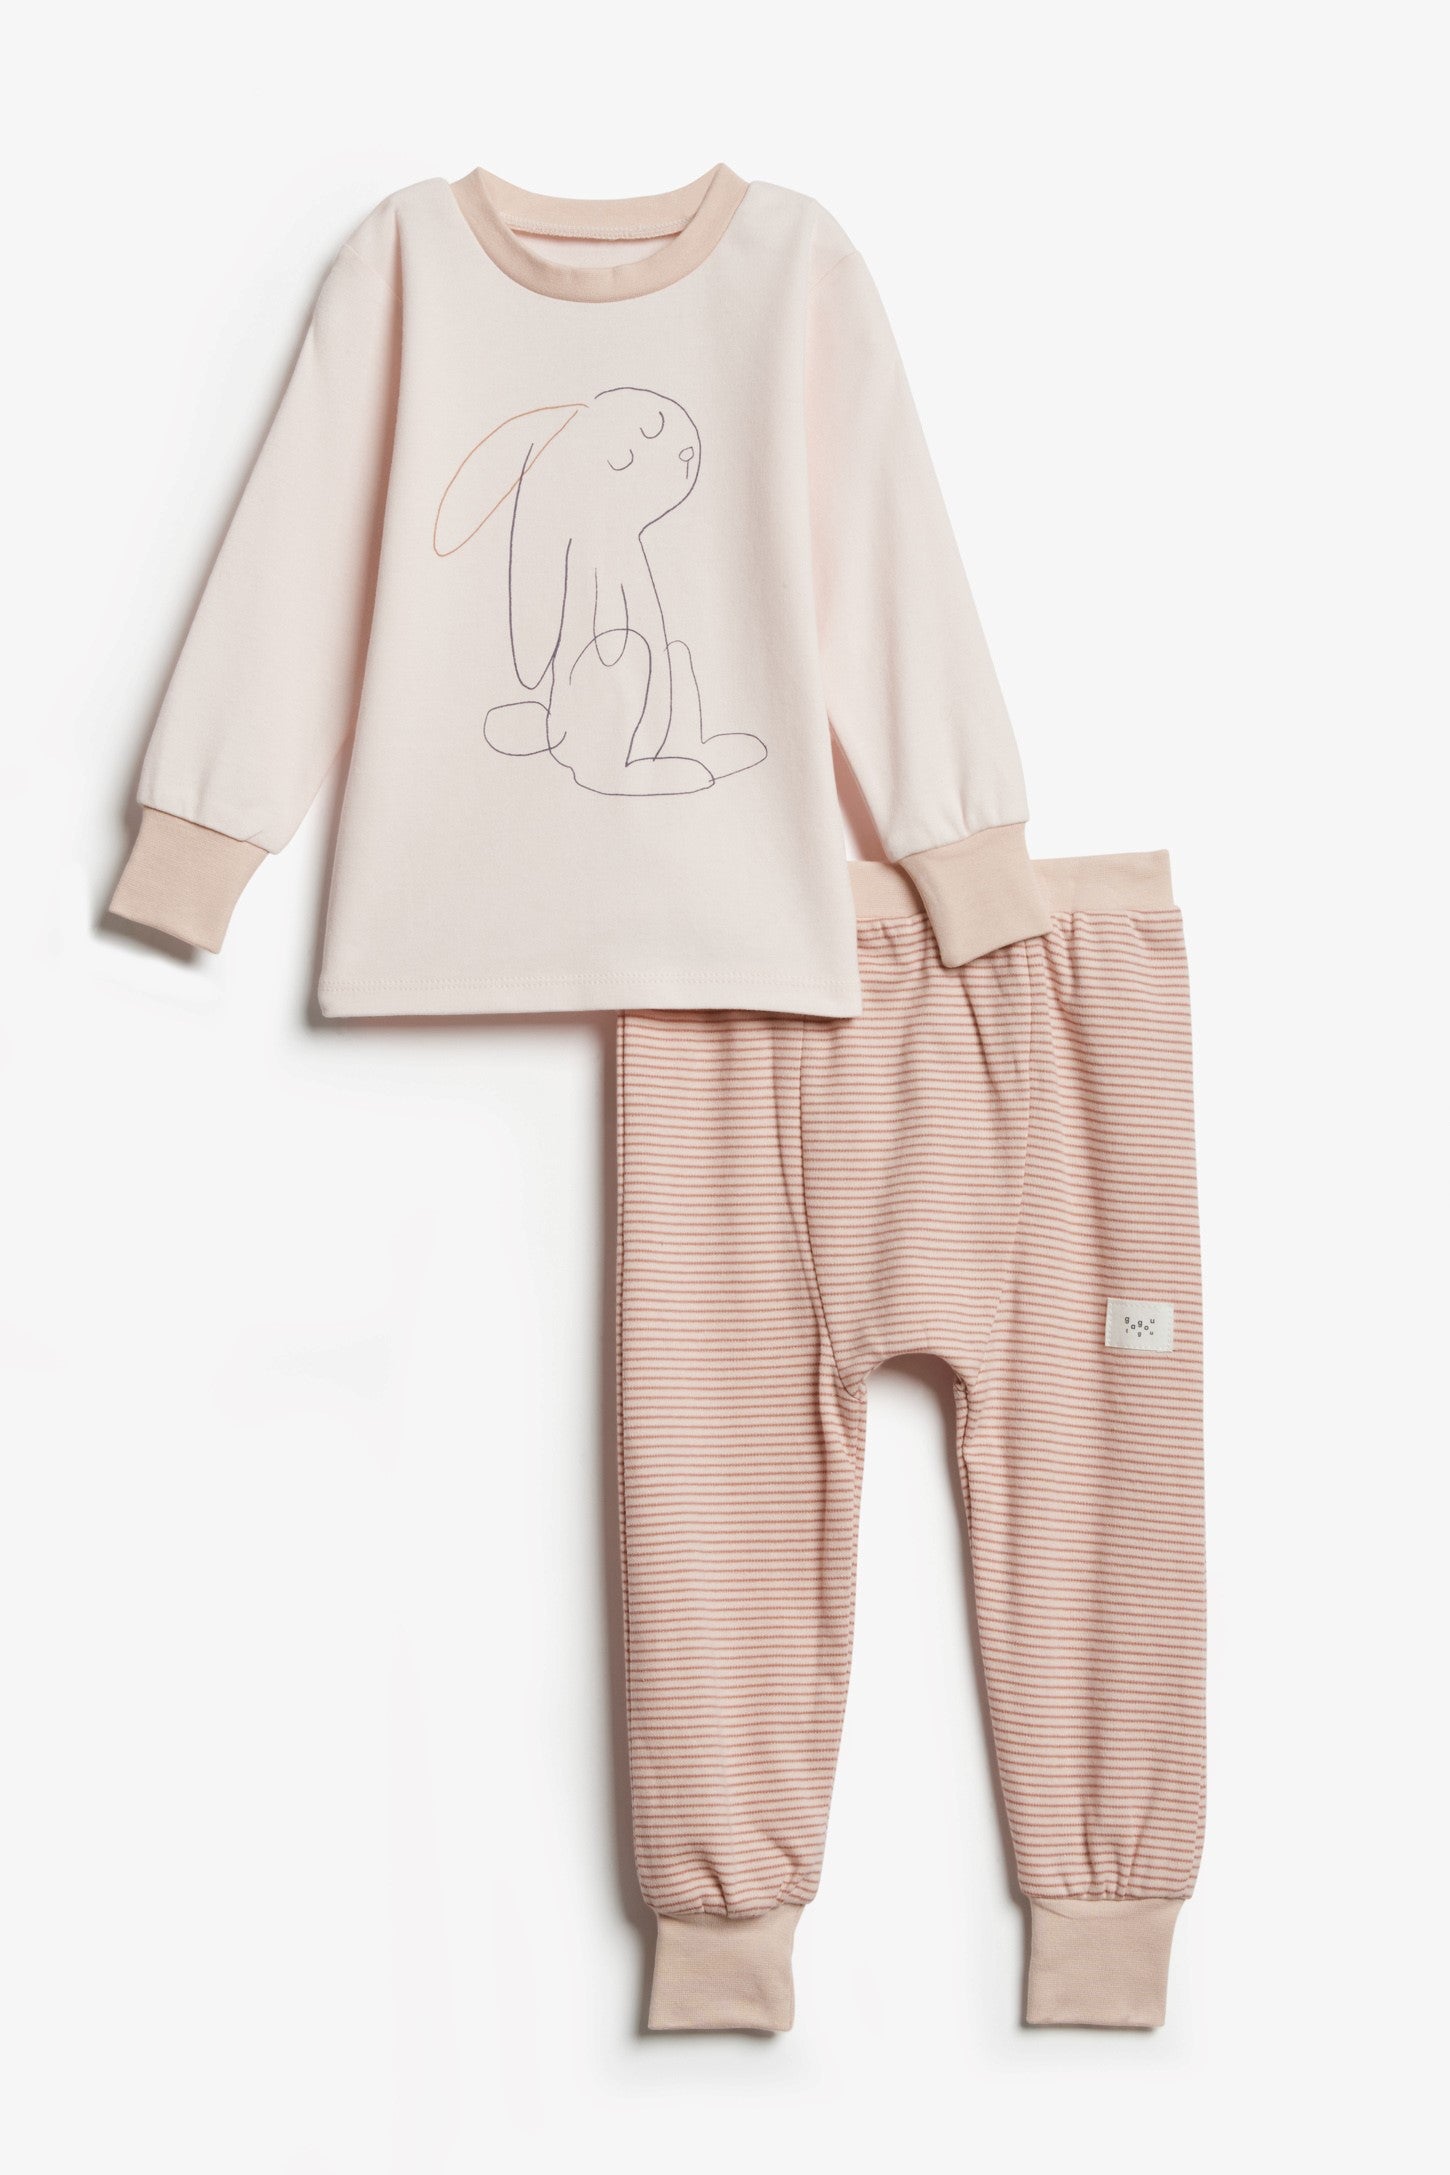 Pyjama 2-pièces imprimé, coton bio, 2T-3T - Bébé && ROSE